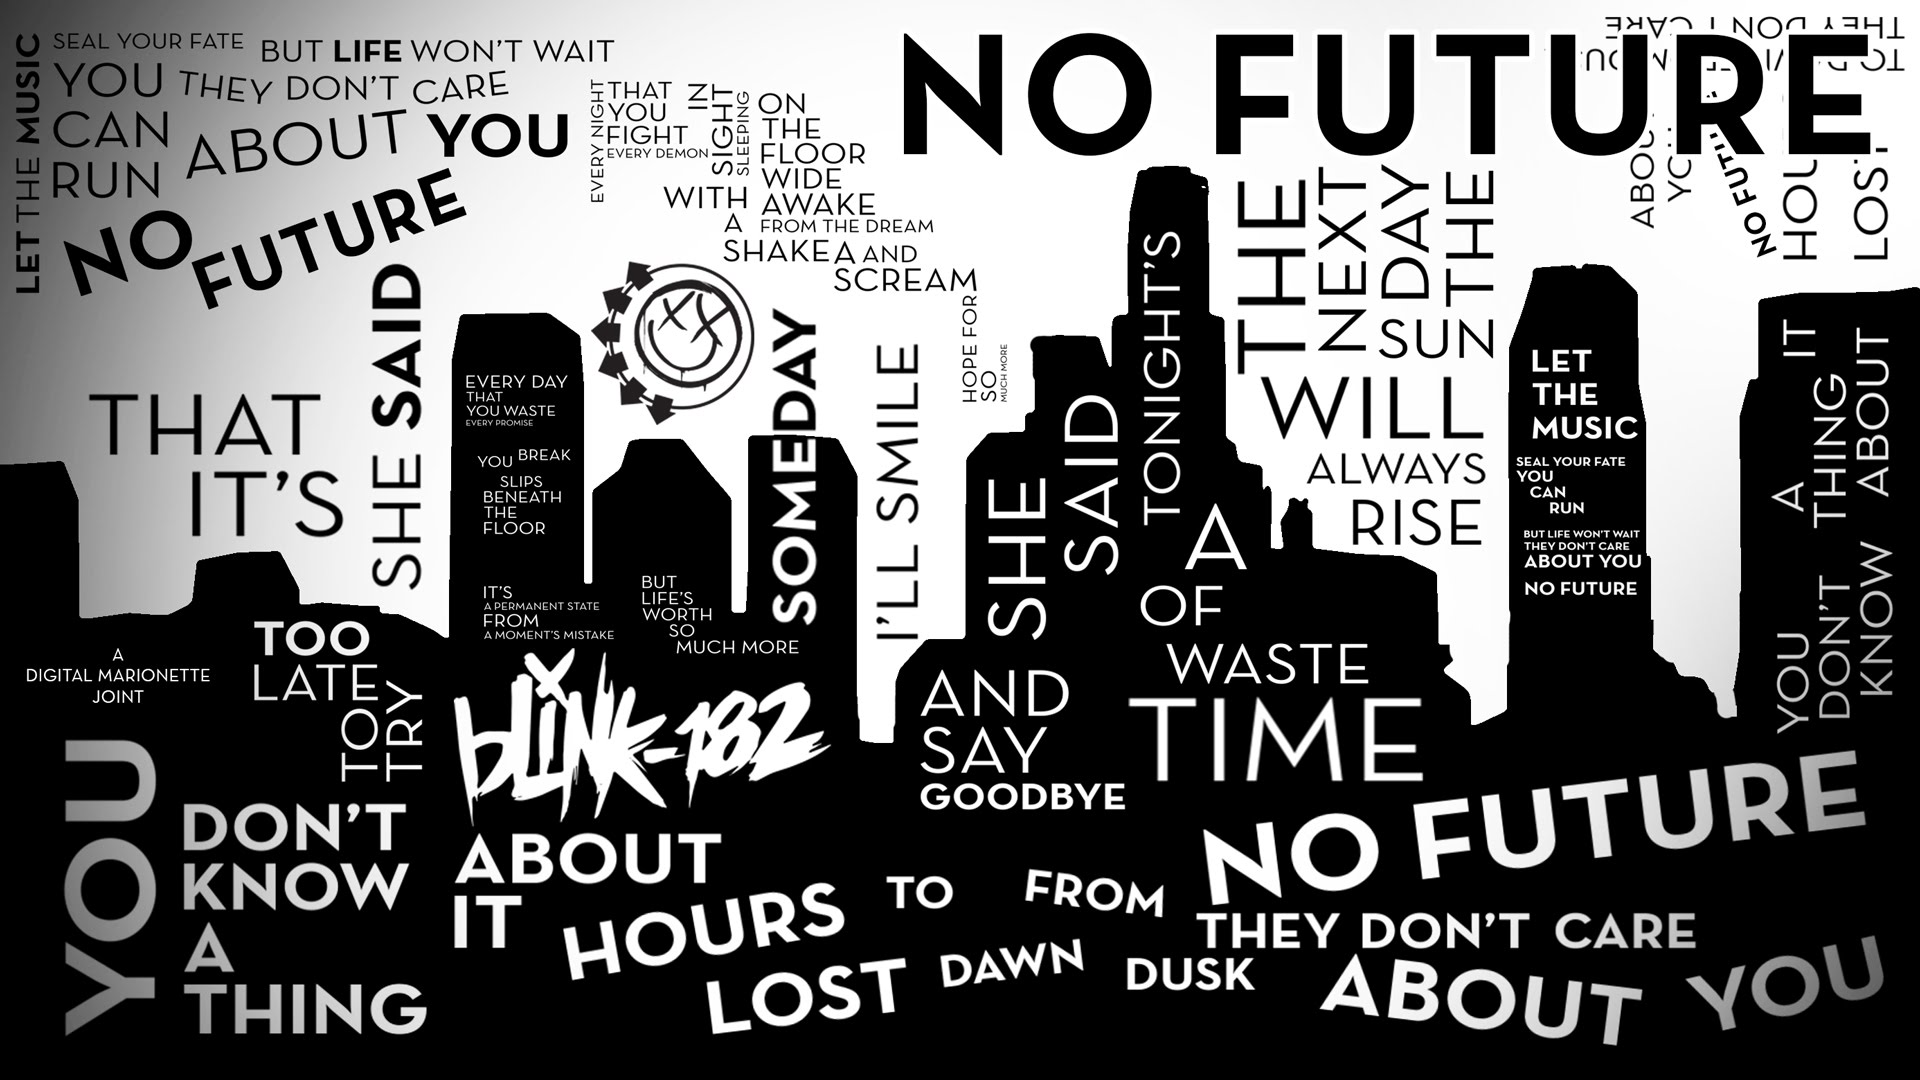 Blink-182 post new chant-along track ‘No Future’